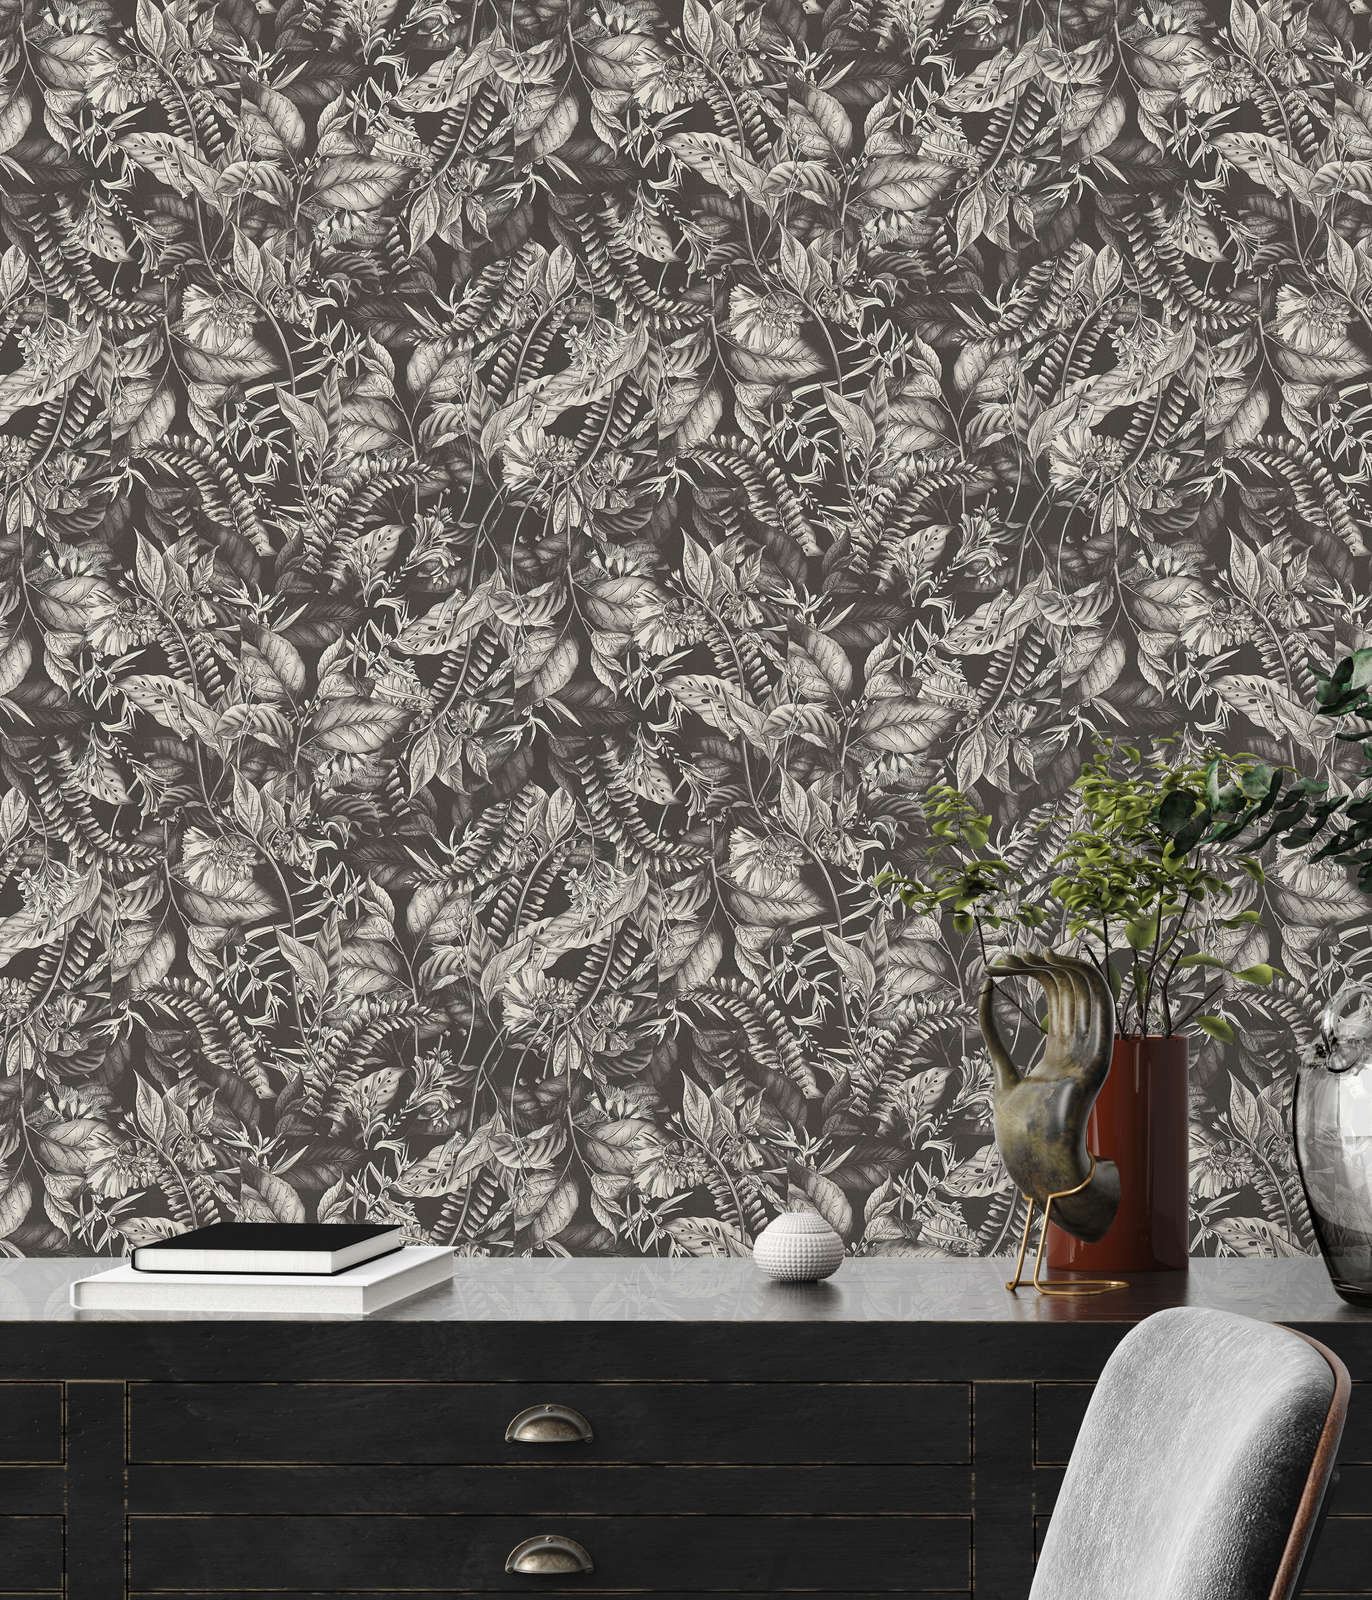             wallpaper floral with leaves & flowers textured matt - black, white
        